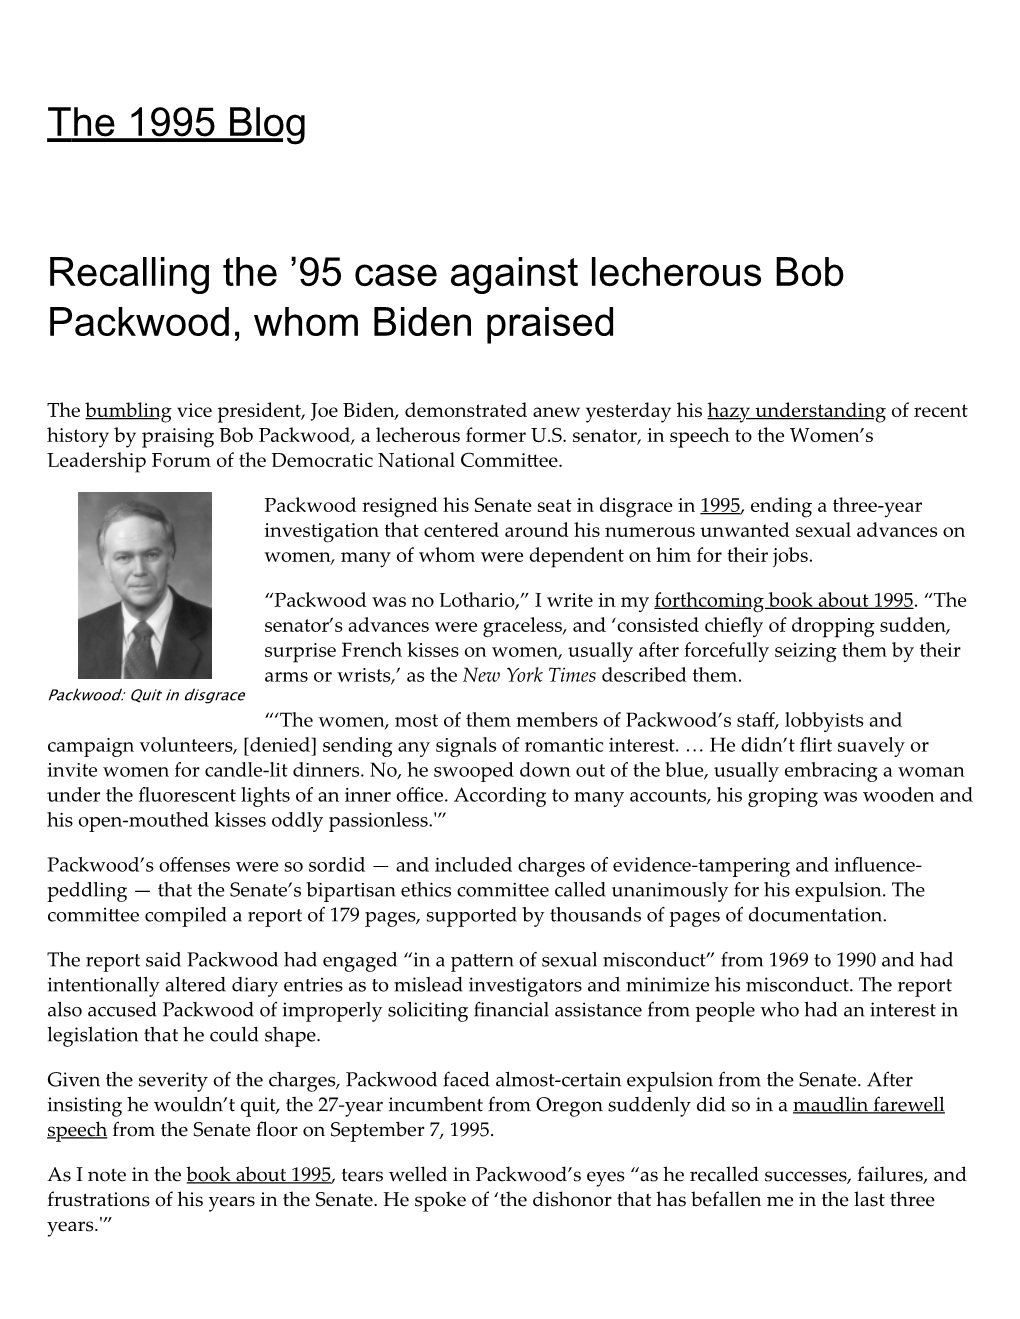 The 1995 Blog Recalling the '95 Case Against Lecherous Bob Packwood, Whom Biden Praised